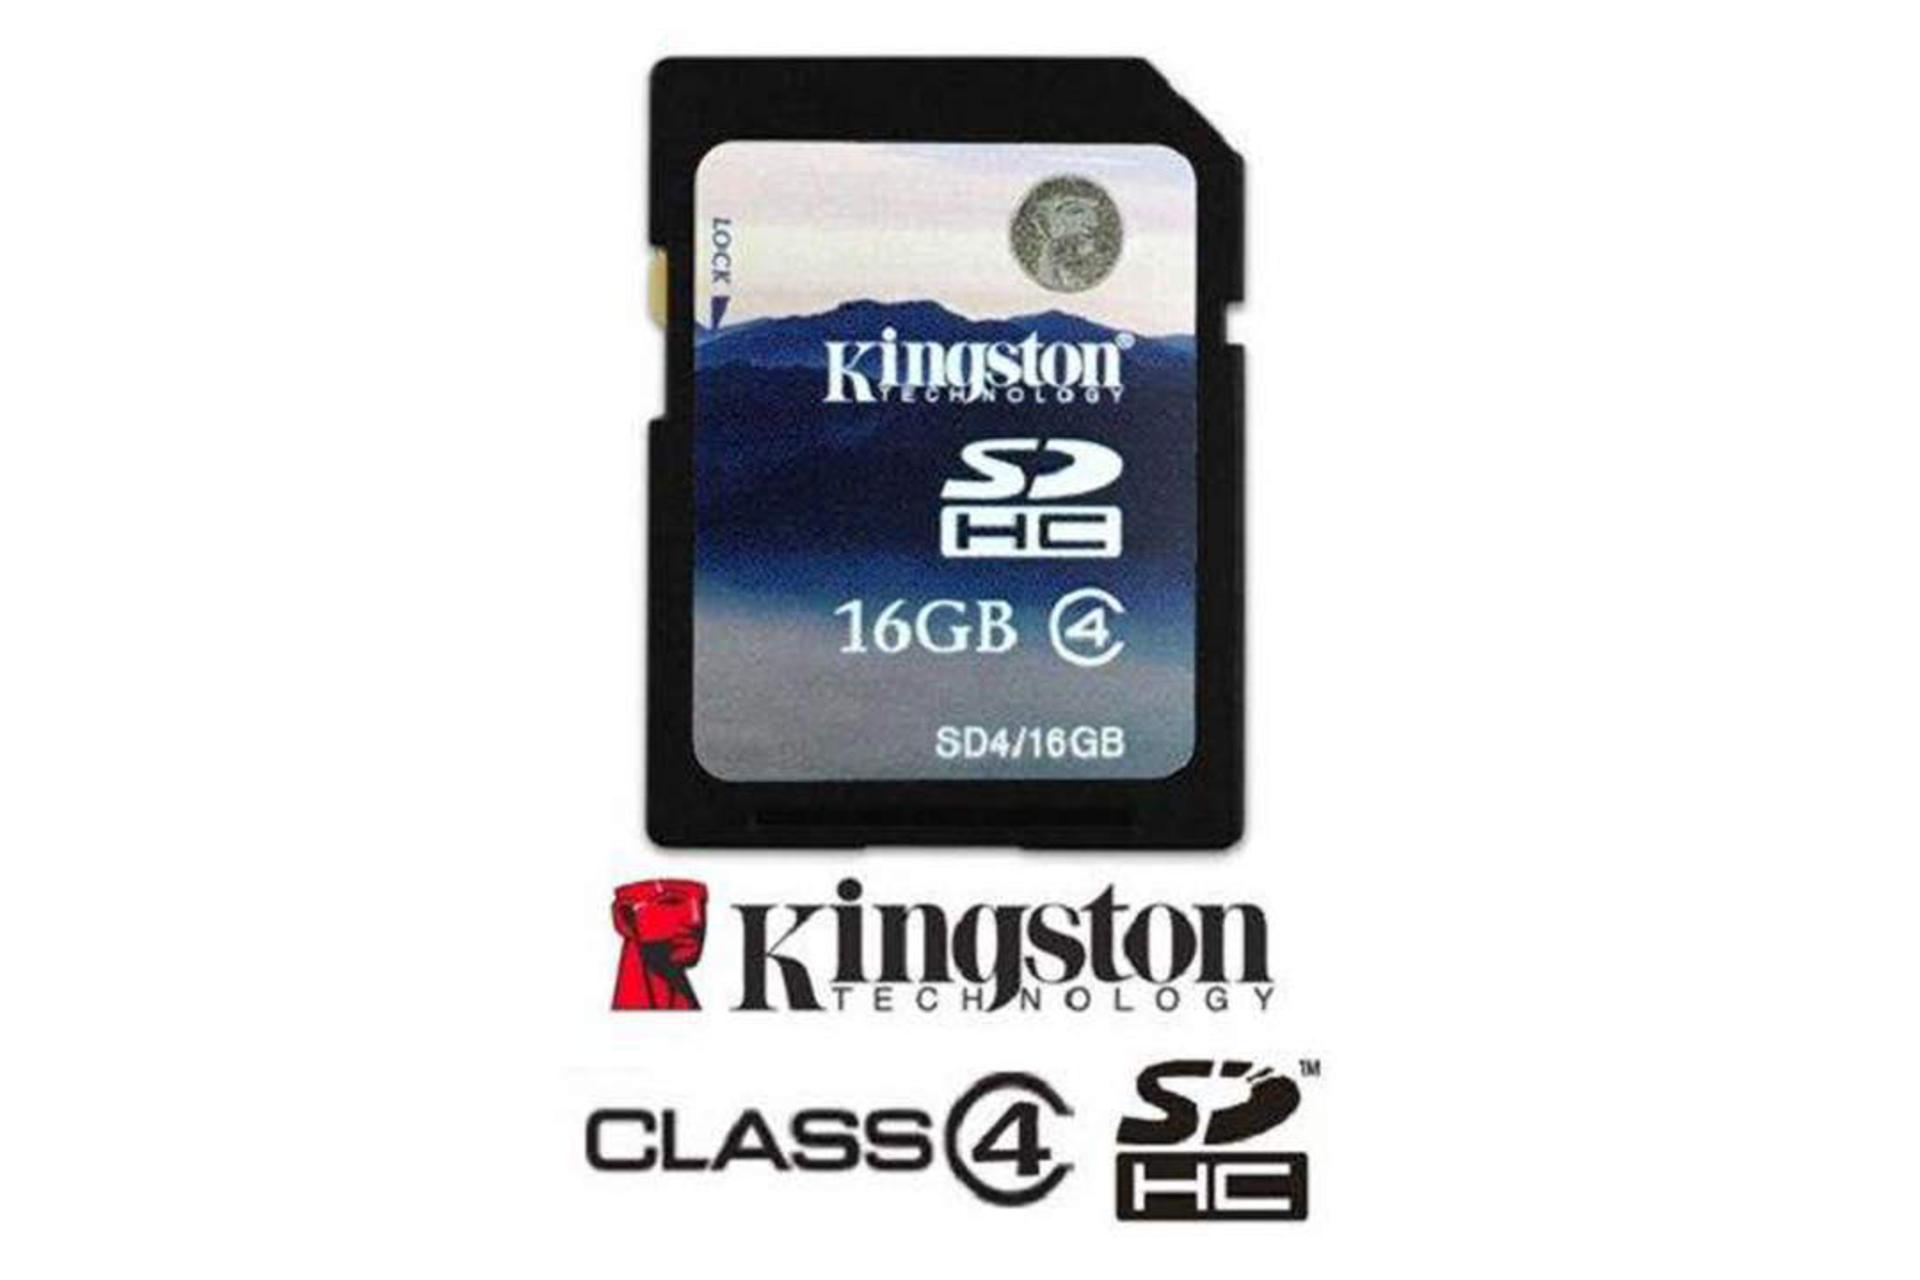 Kingston SD4 SDHC Class 4 16GB